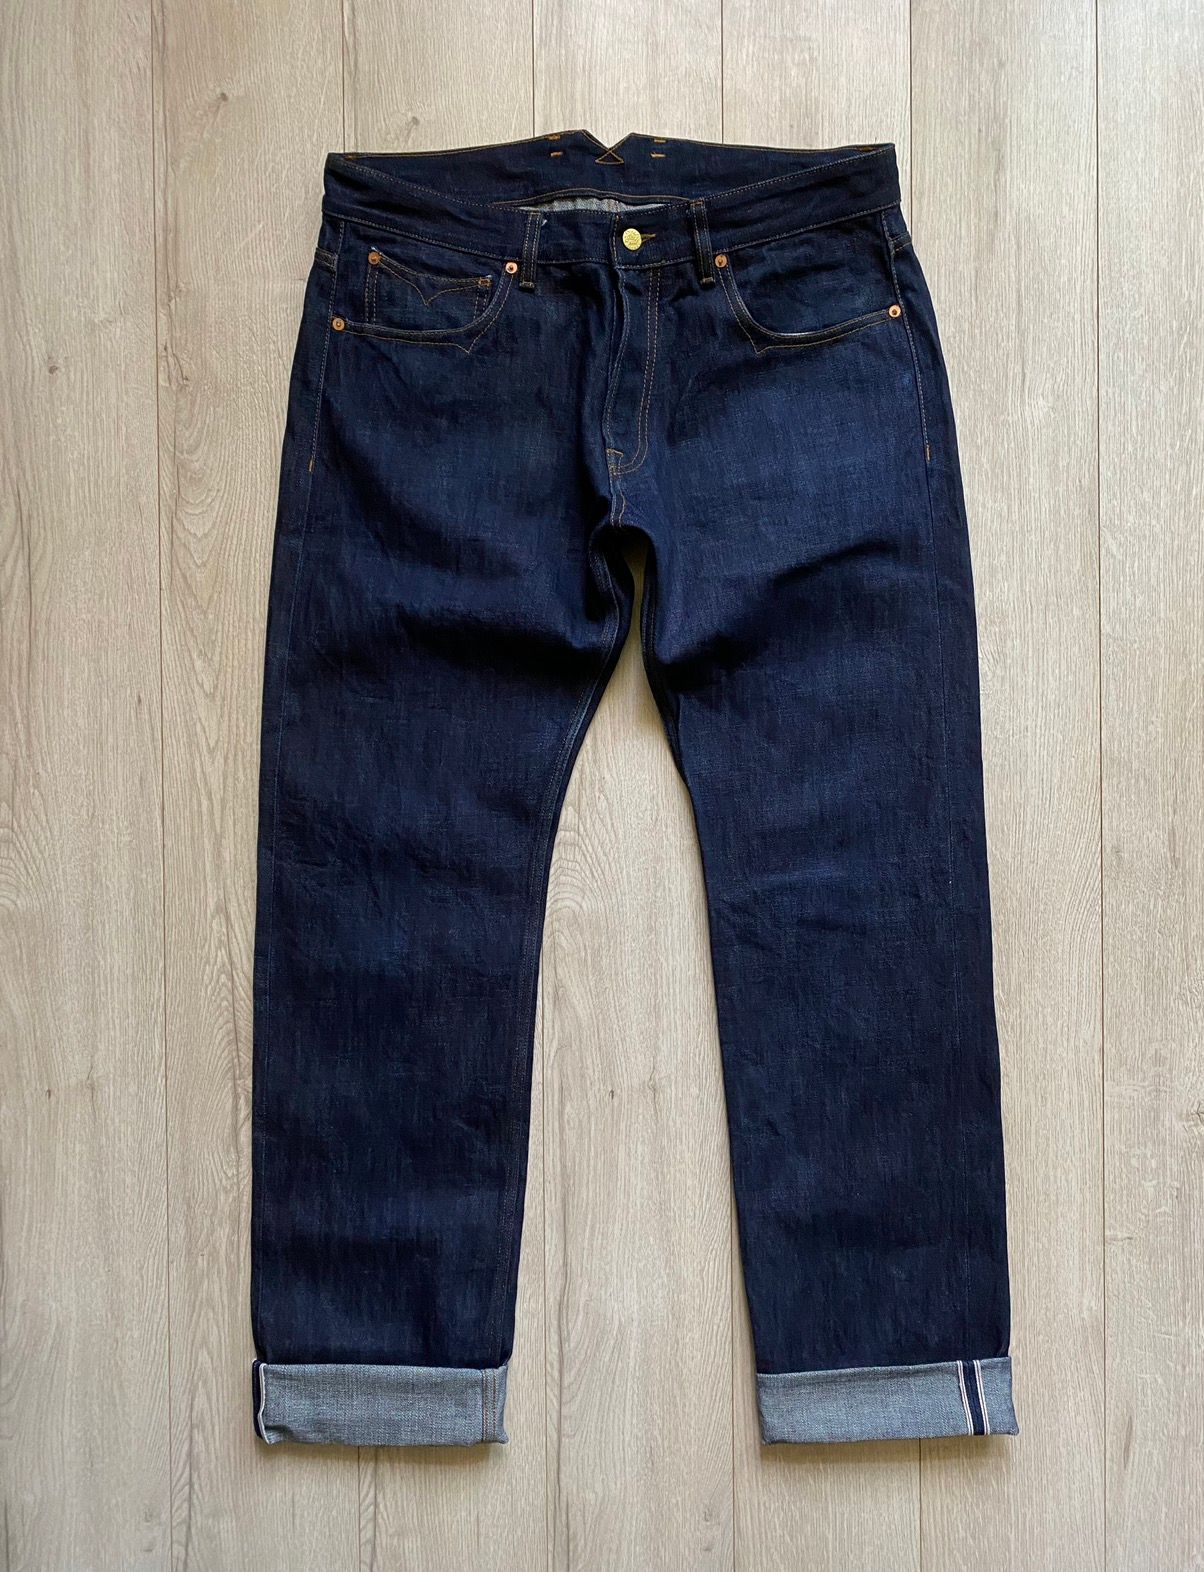 Italian Designers Hens Teeth jeans selvedge Italian denim original 14,3 Oz Size US 36 / EU 52 - 2 Preview